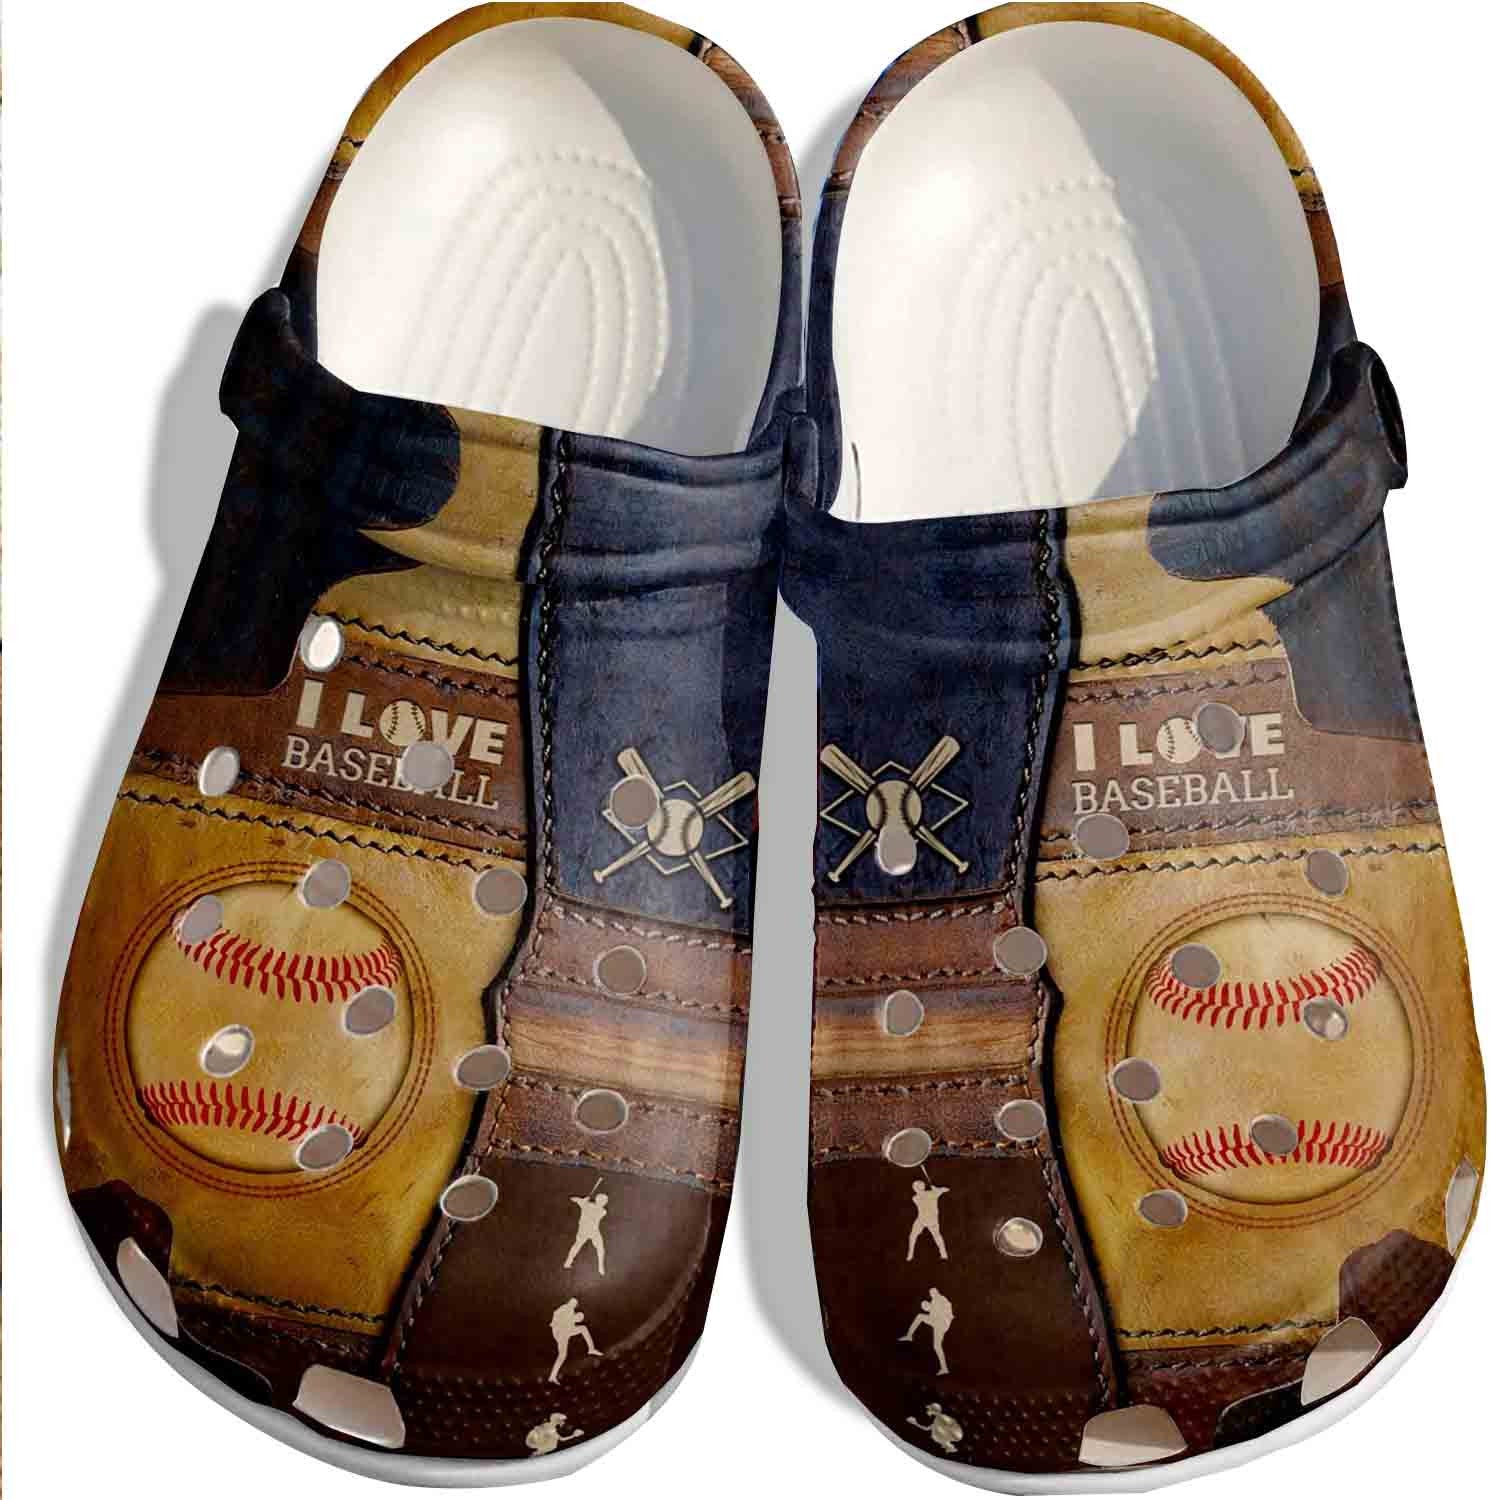 I Love Baseball Crocss Shoes Clogs For Batter – Funny Baseball Outdoor Crocss Shoes Clogs For Birthday